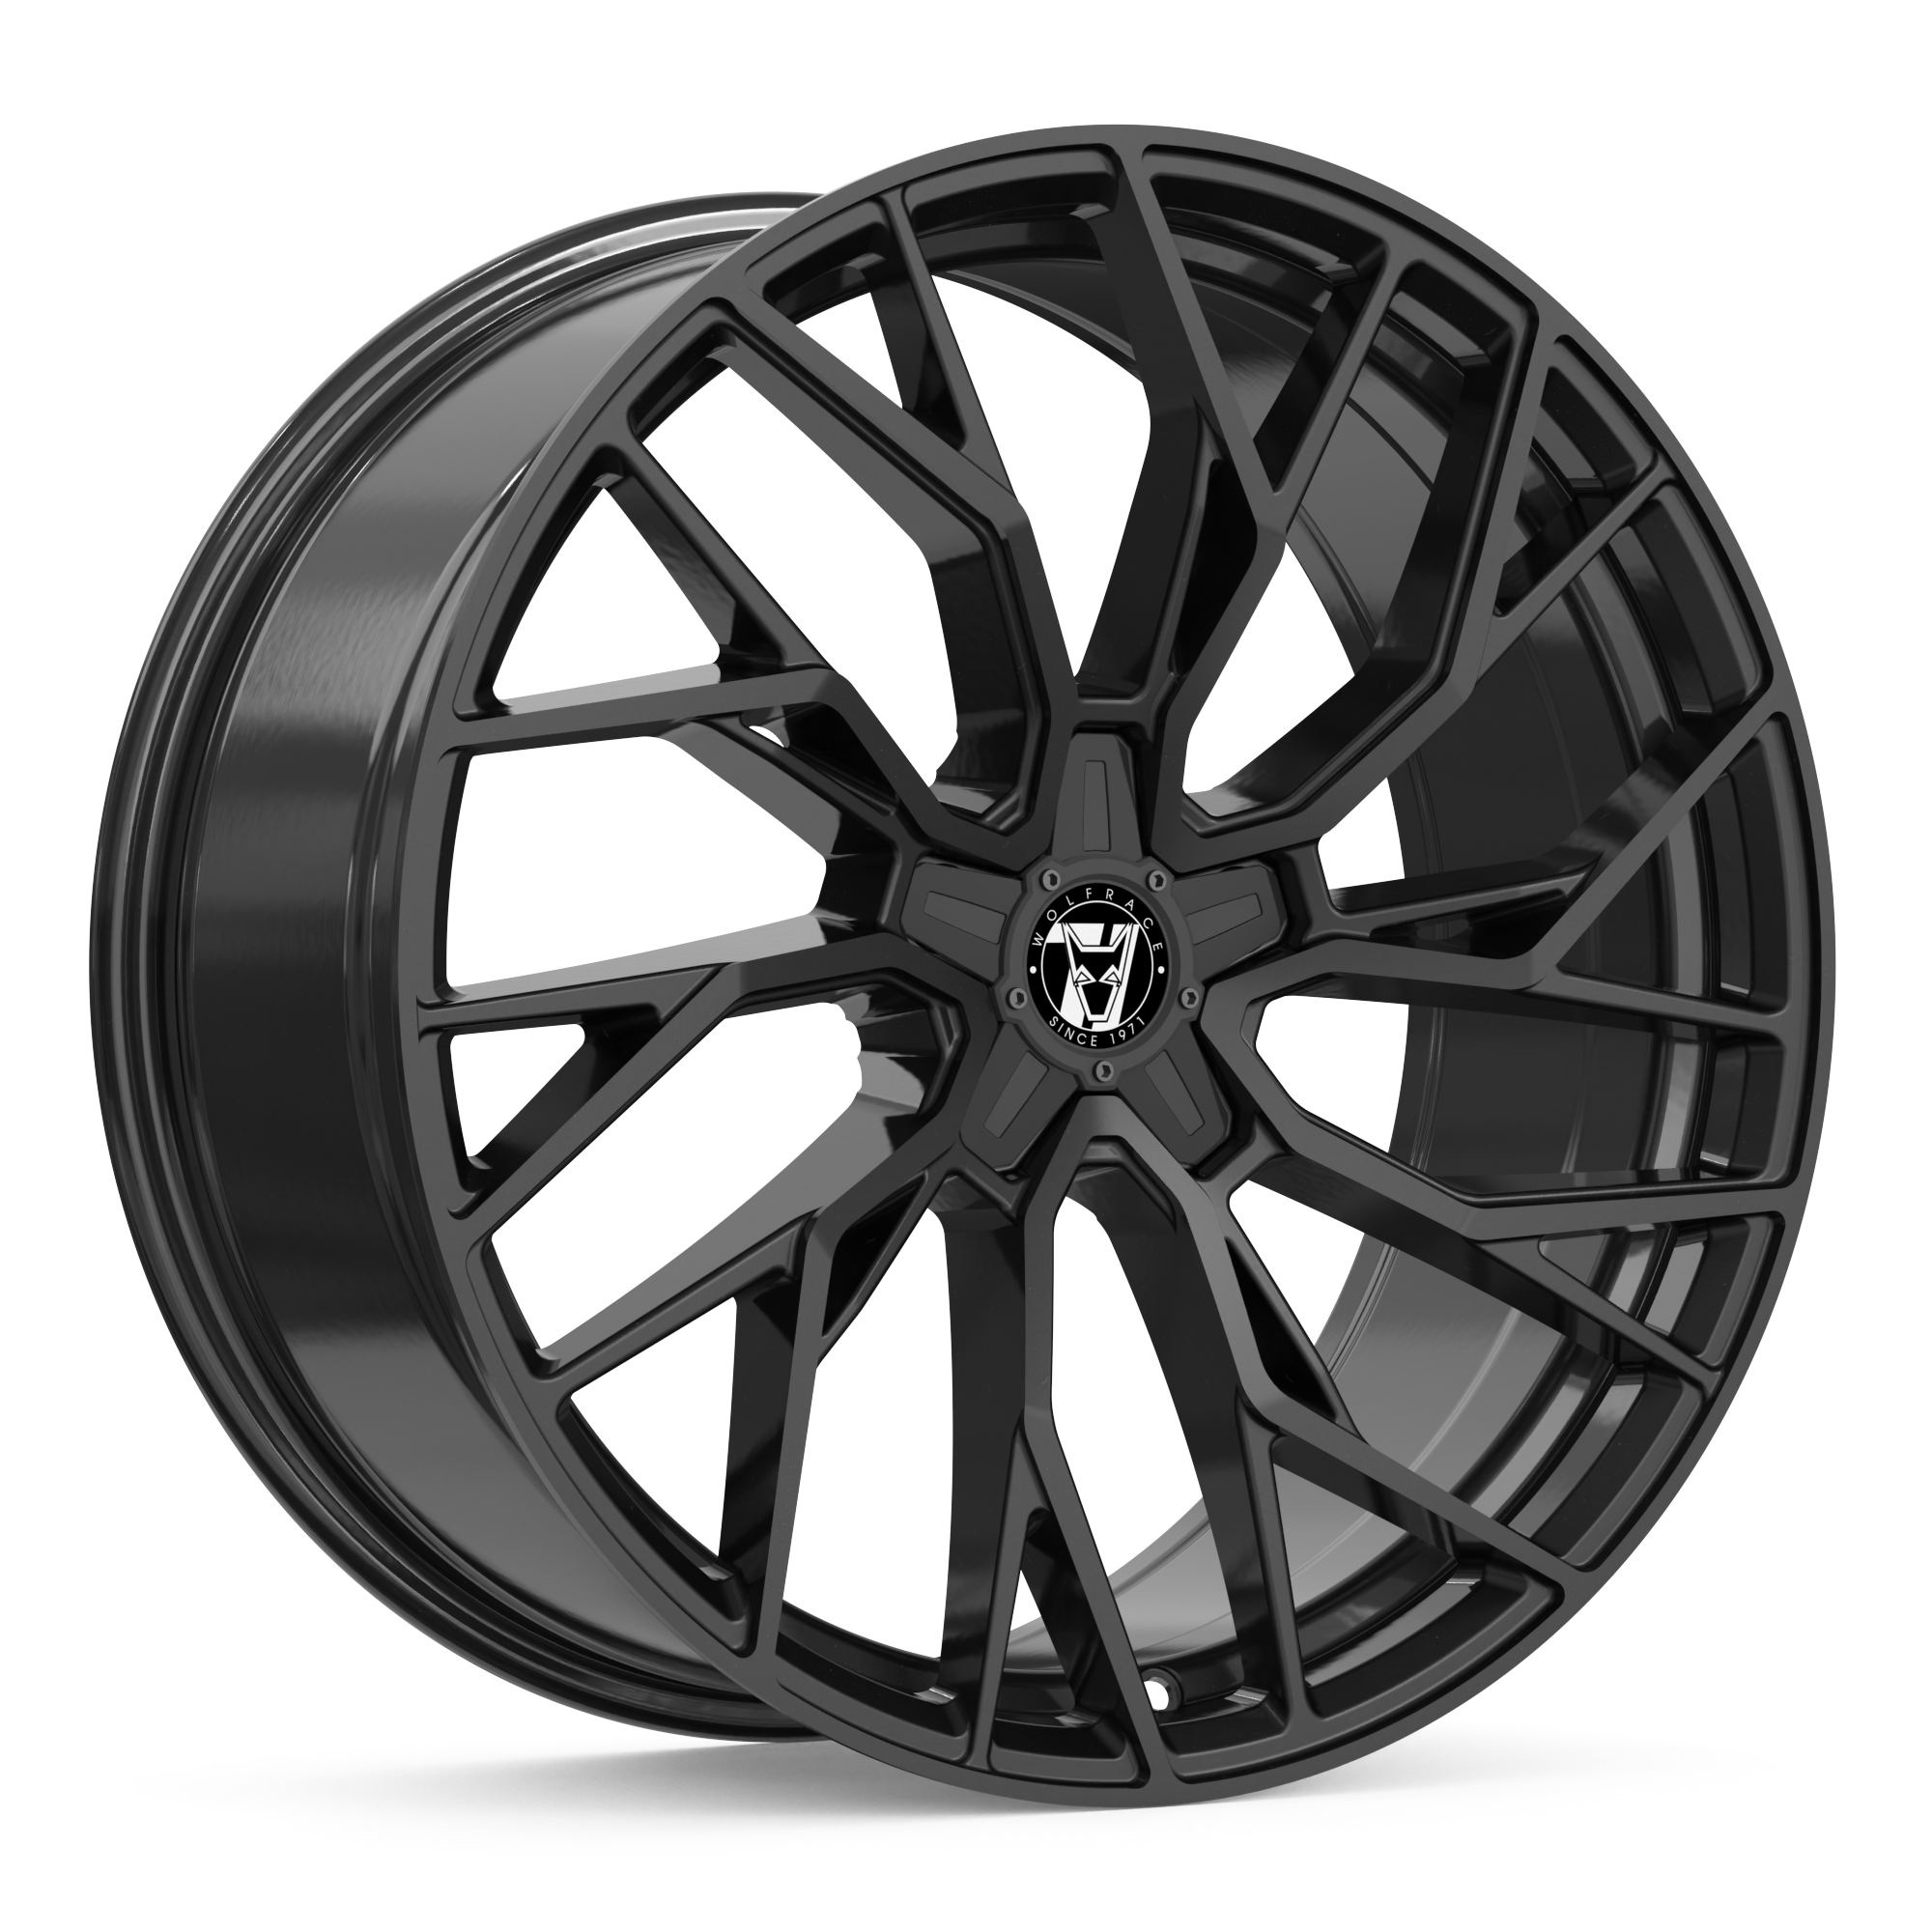 Jantes alu Demon Wheels 71 Voodoo Black Edition [9.5x22] -5x114.3- ET 45